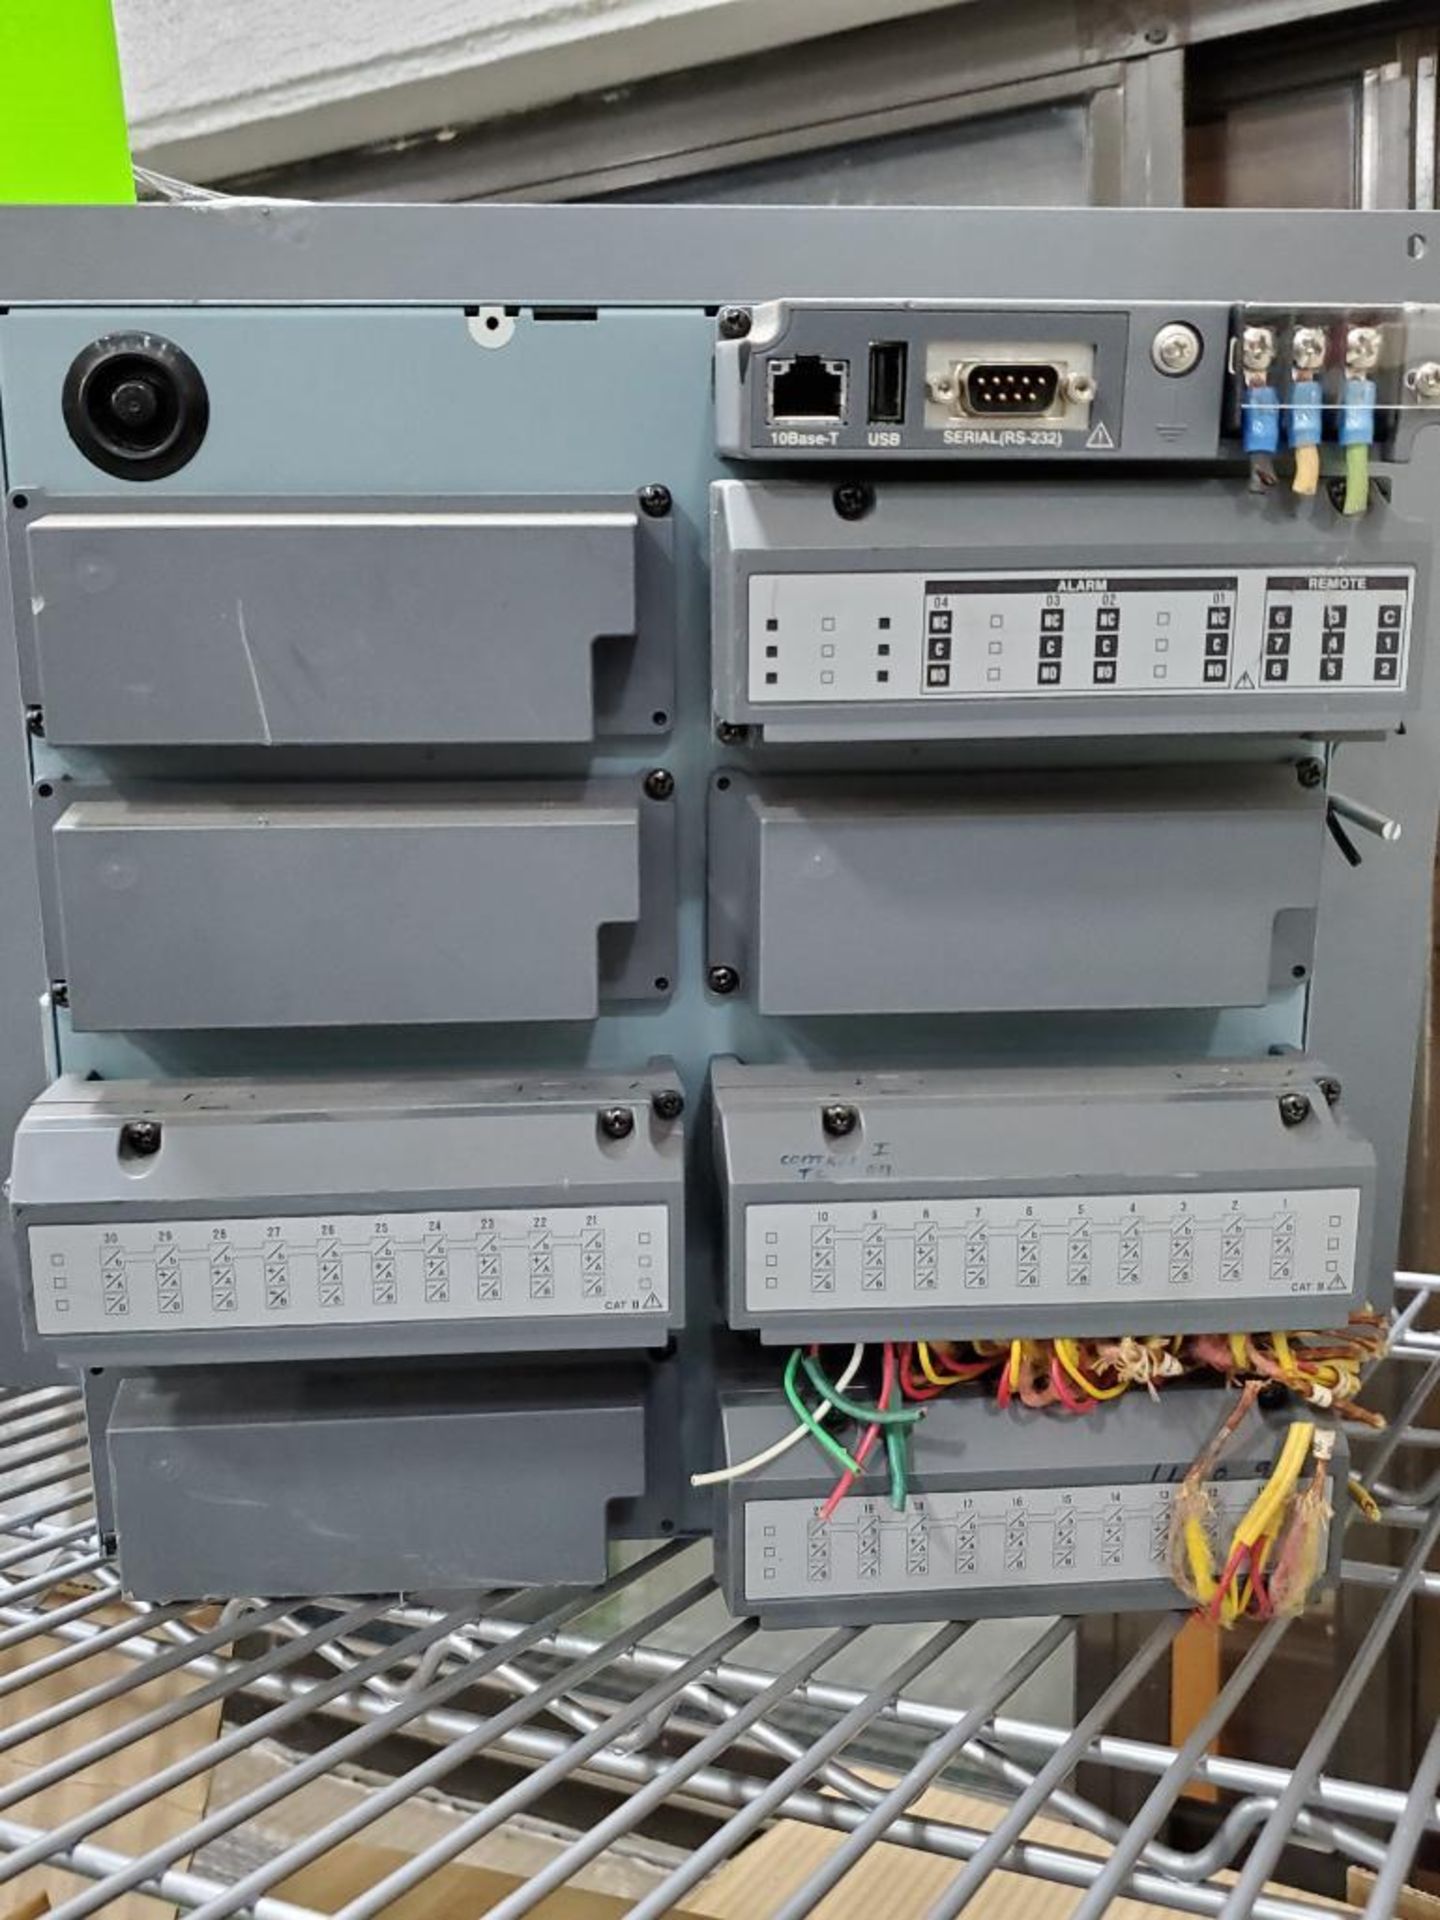 Yokogawa data acquisition center. Daqstation. Model DX2030. Part # DX2030-3-4-2/A2/C2/M1/R1/USB1/CC1 - Image 3 of 4